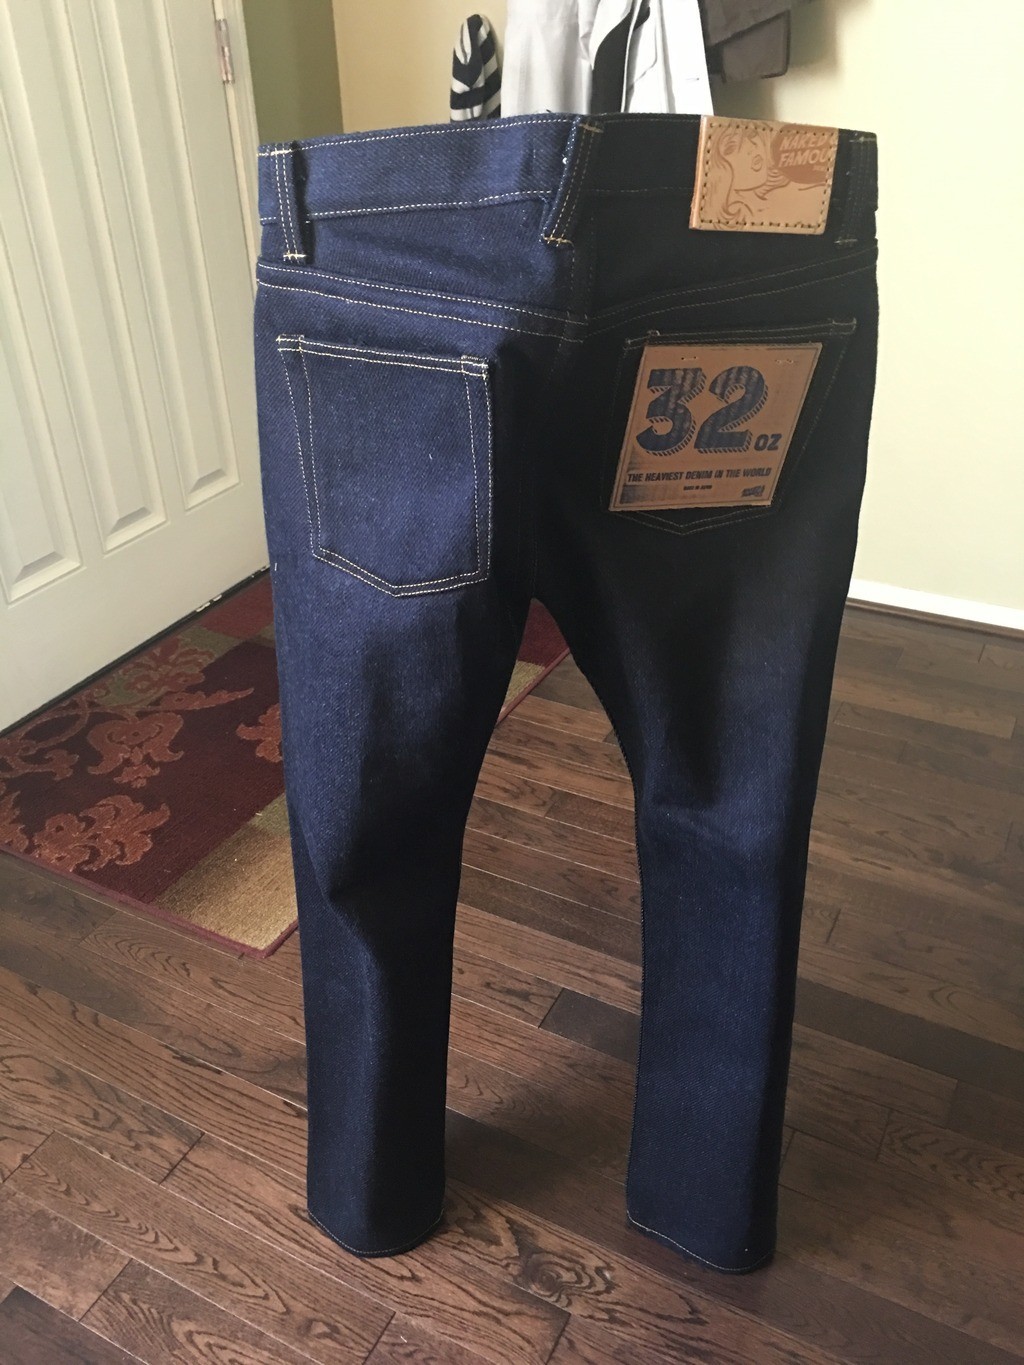 32 oz denim jeans